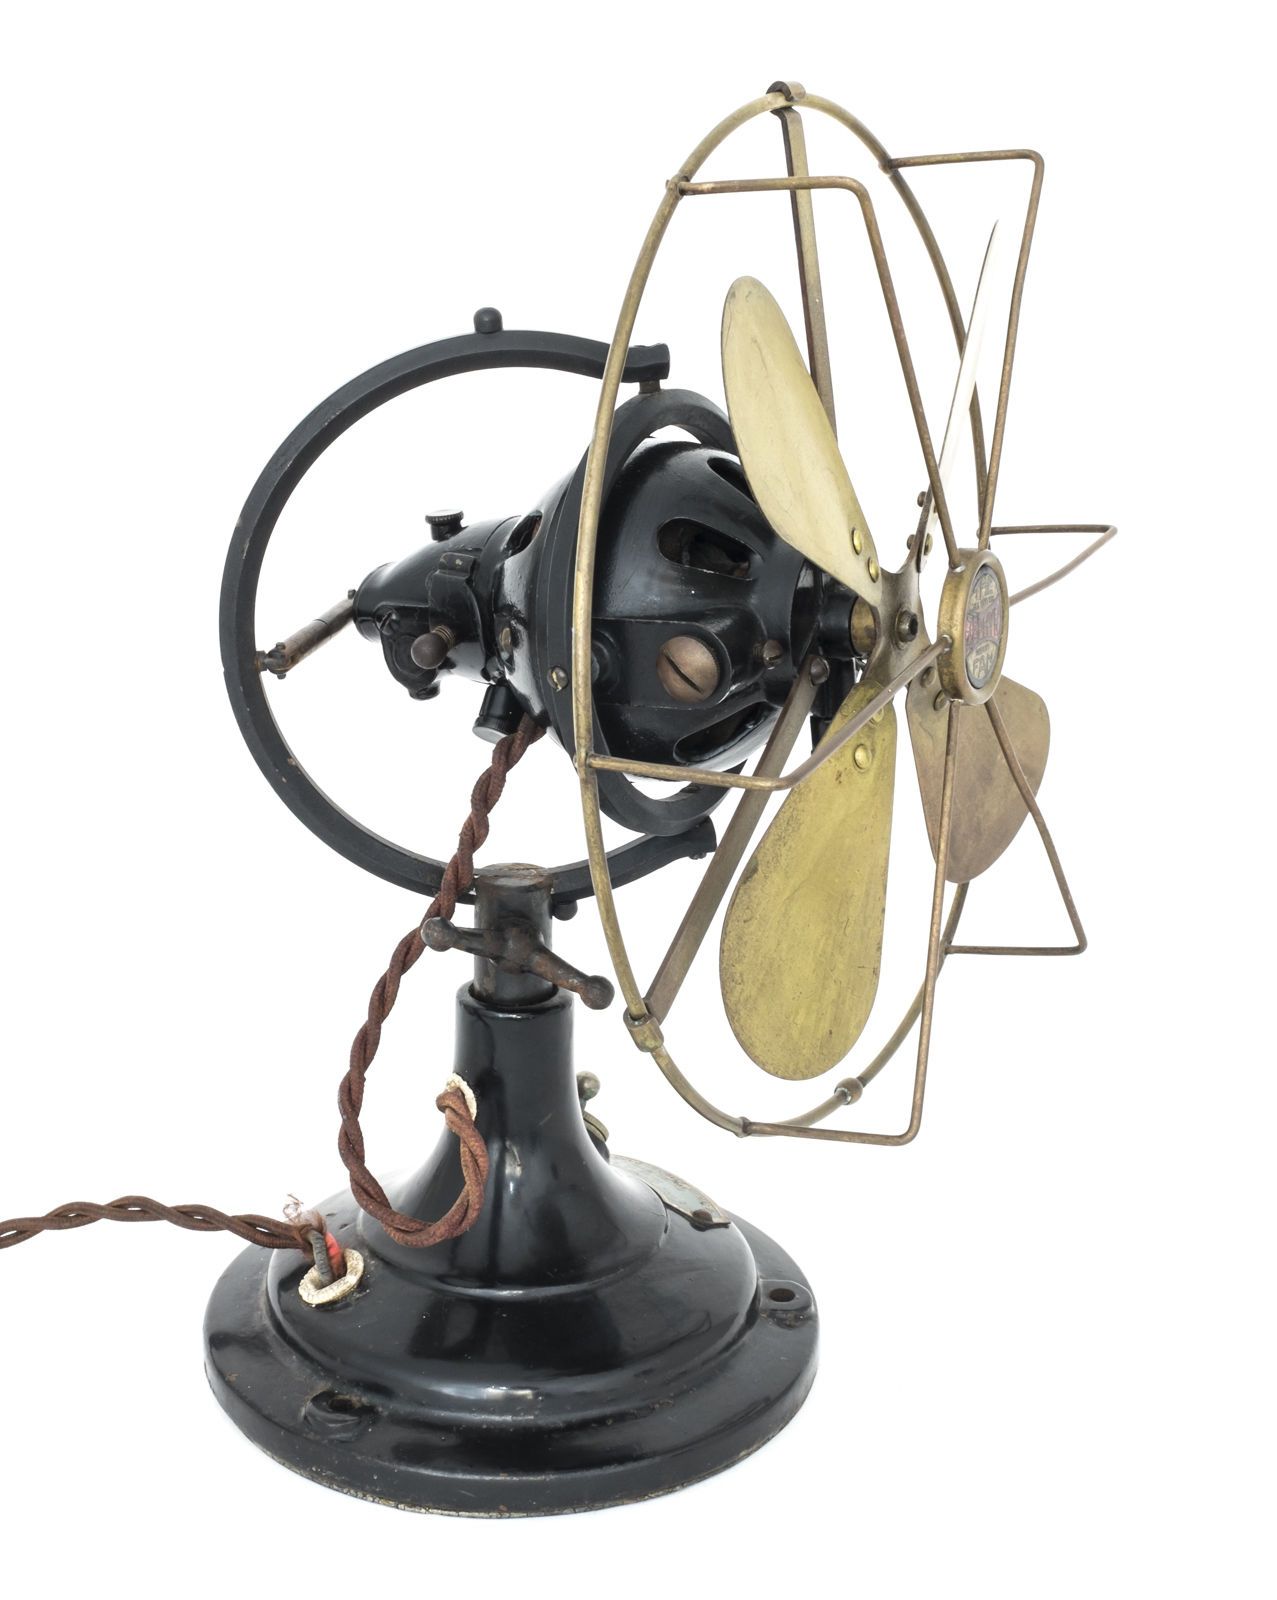 1926 veritys zephyr antique electric fan | Electric fan, Fans and ...